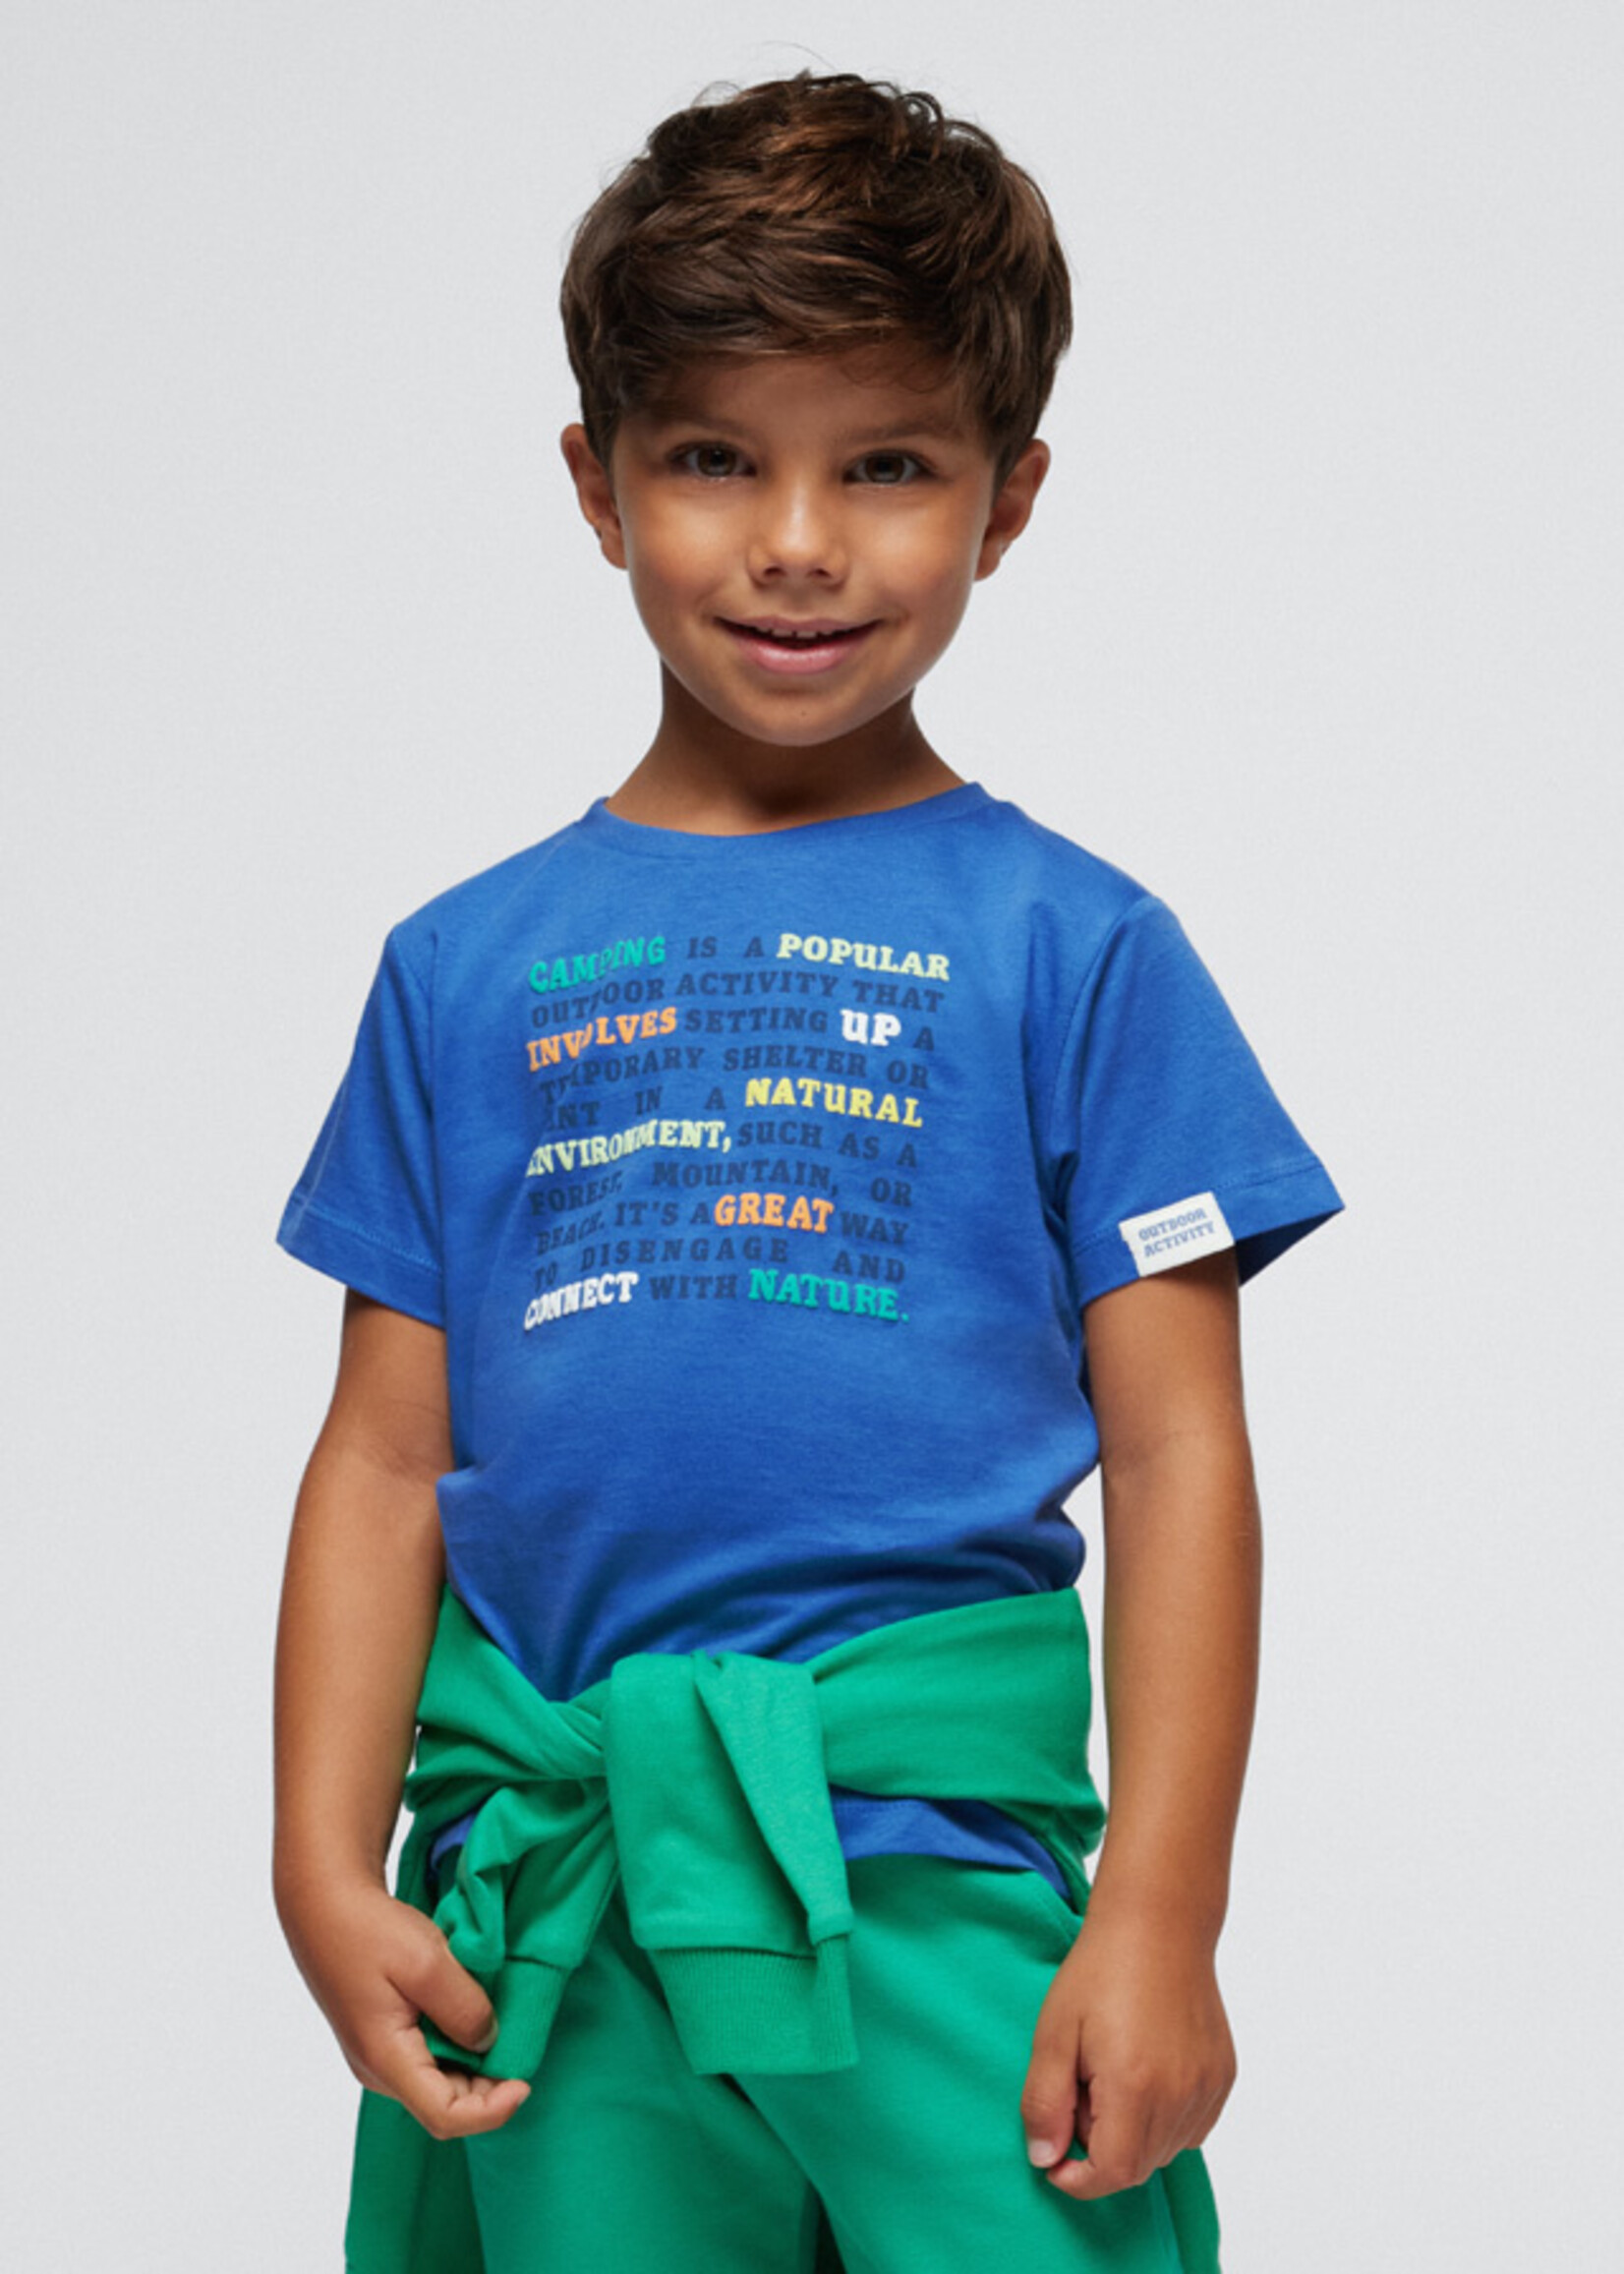 Mayoral Mini Boy             3005 2 S/s t-shirts set            Navy